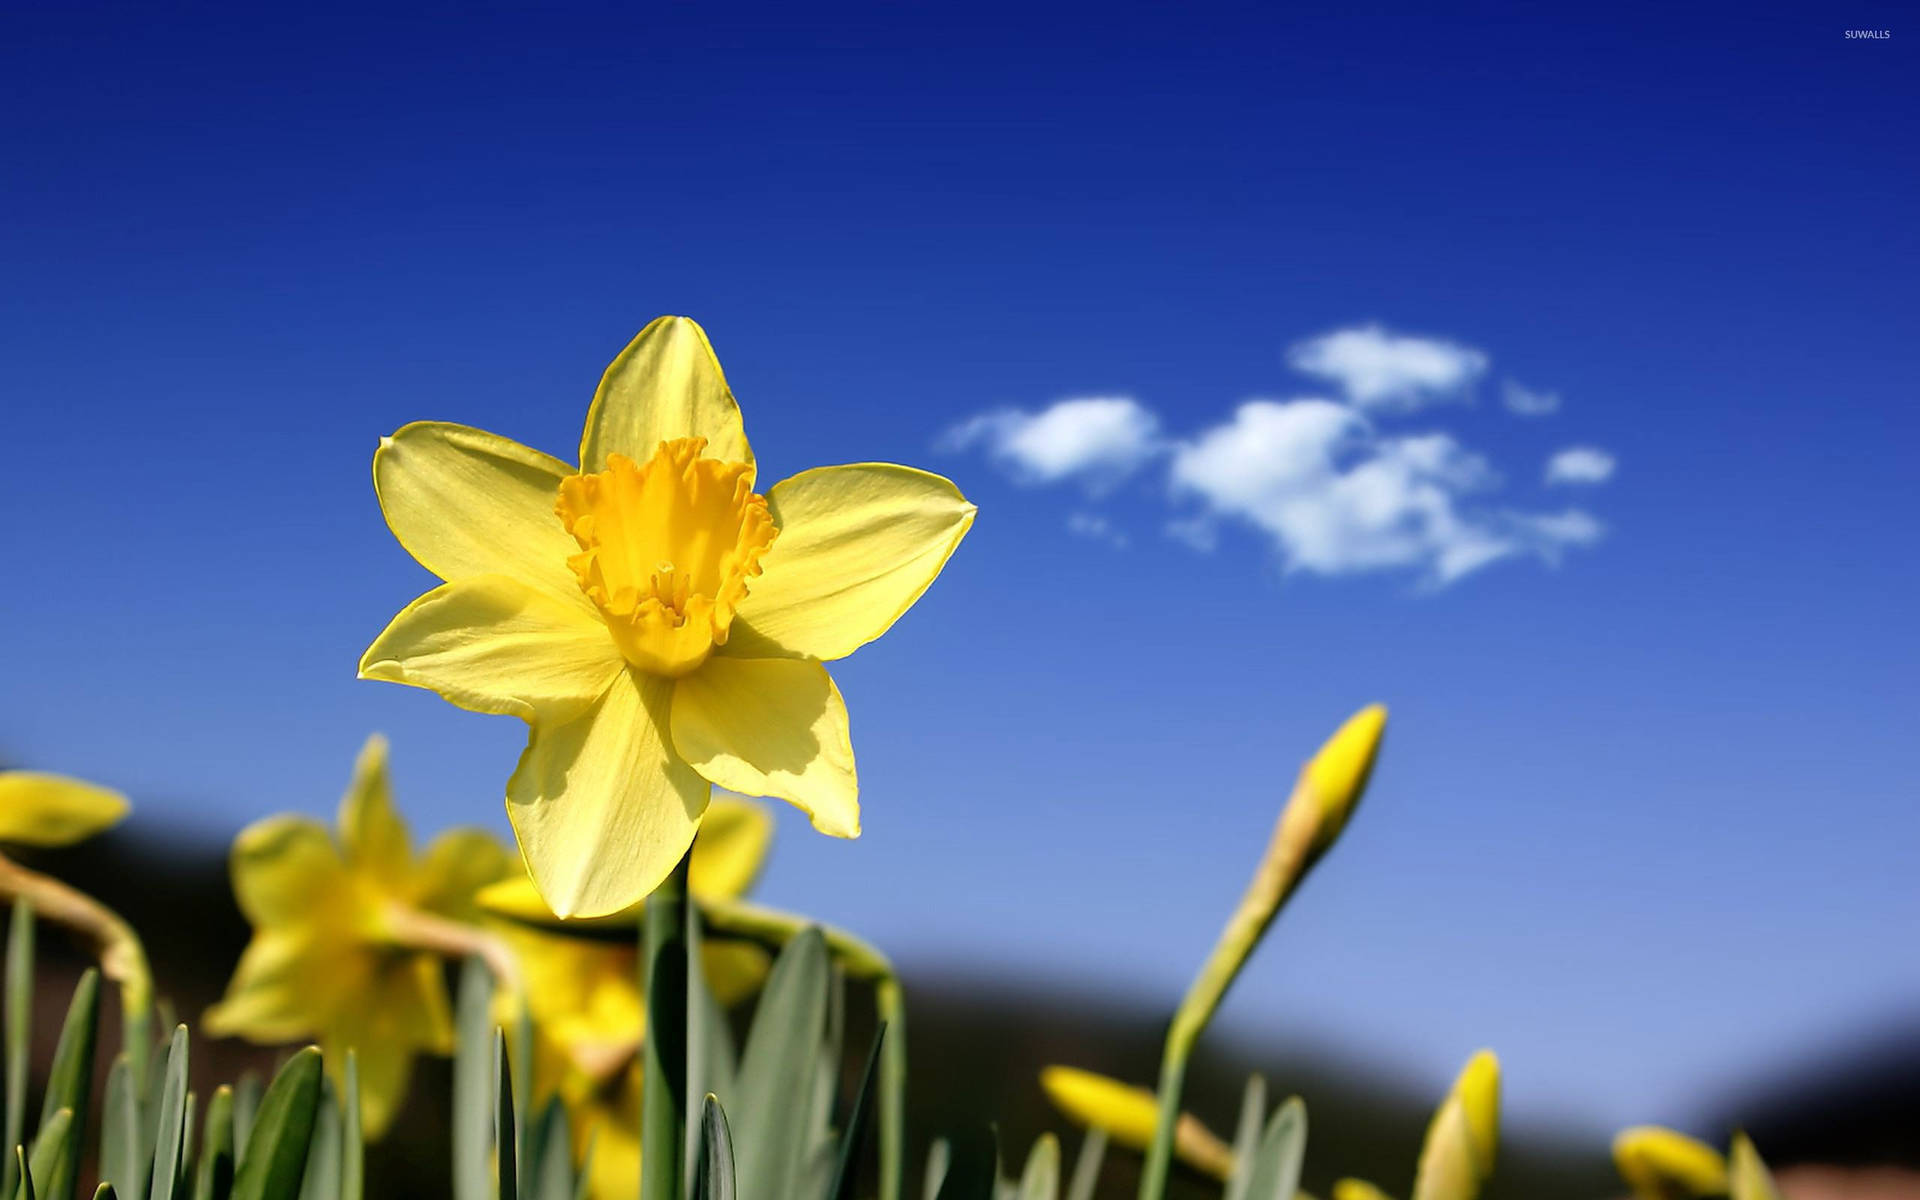 Blue Sky Over Macro Shot Daffodils